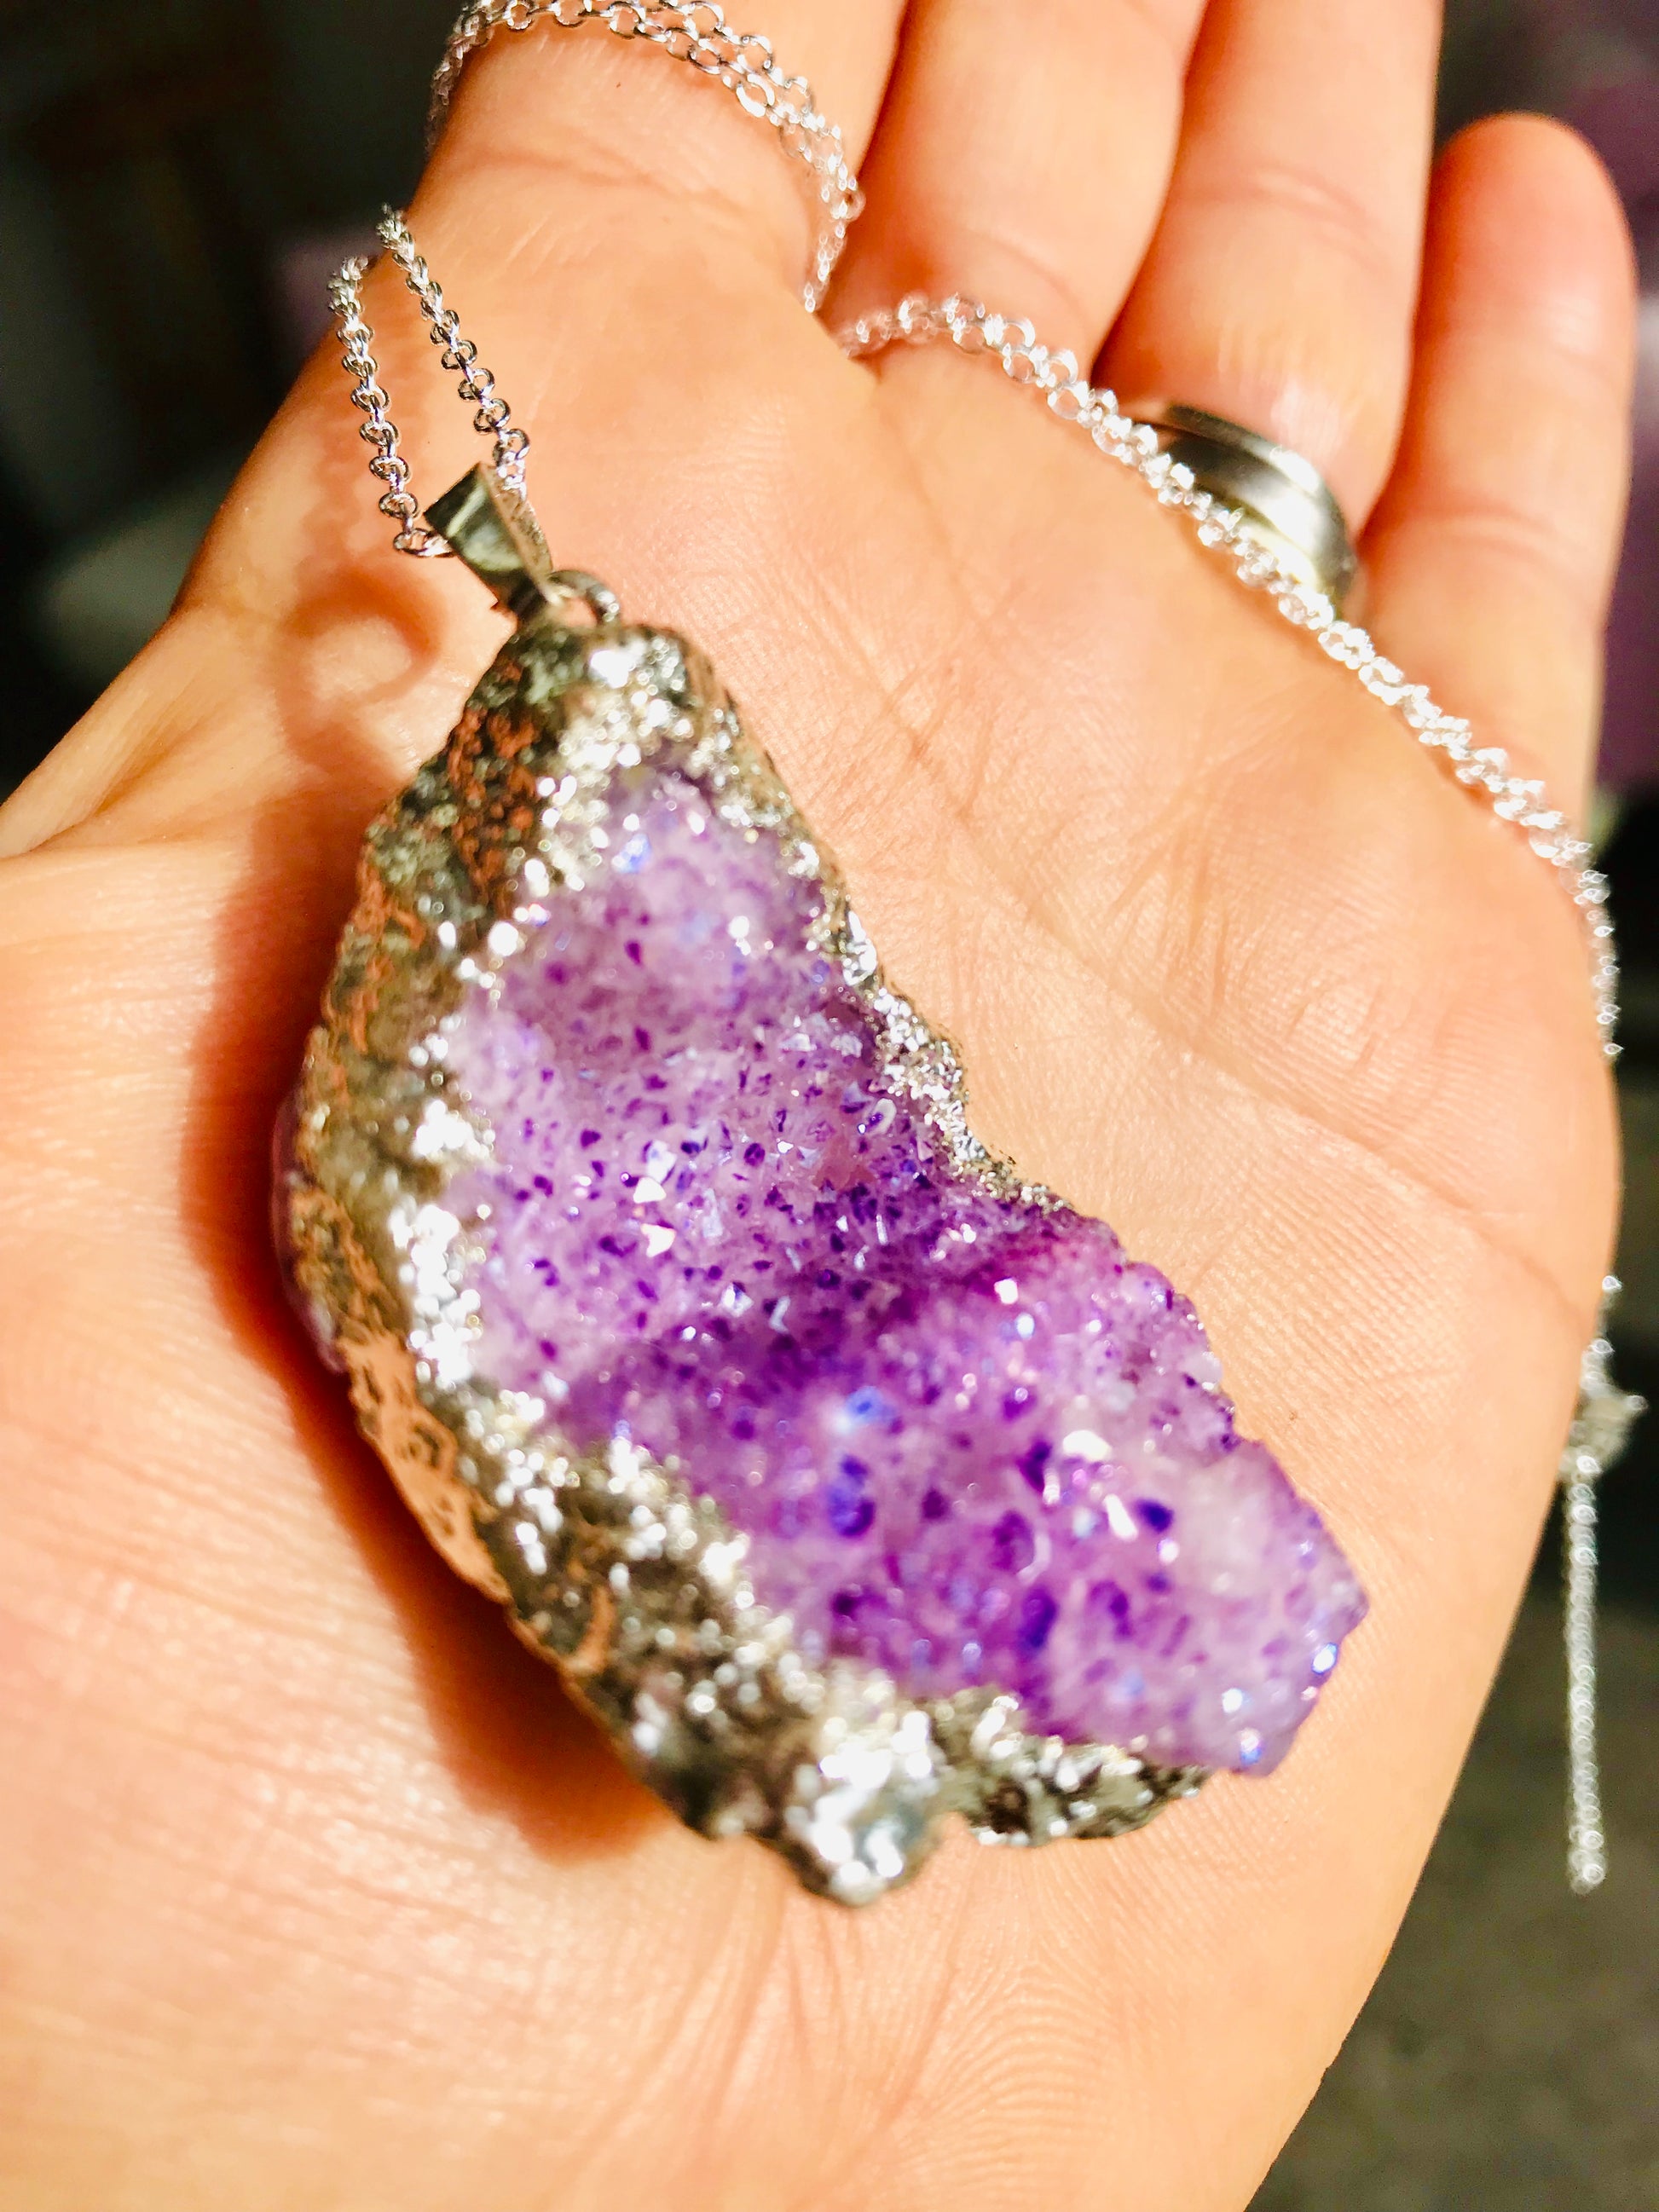 Druzy Crystal Healing Quartz Pendant Necklace - Lilac - Crystal Boutique.co.uk 